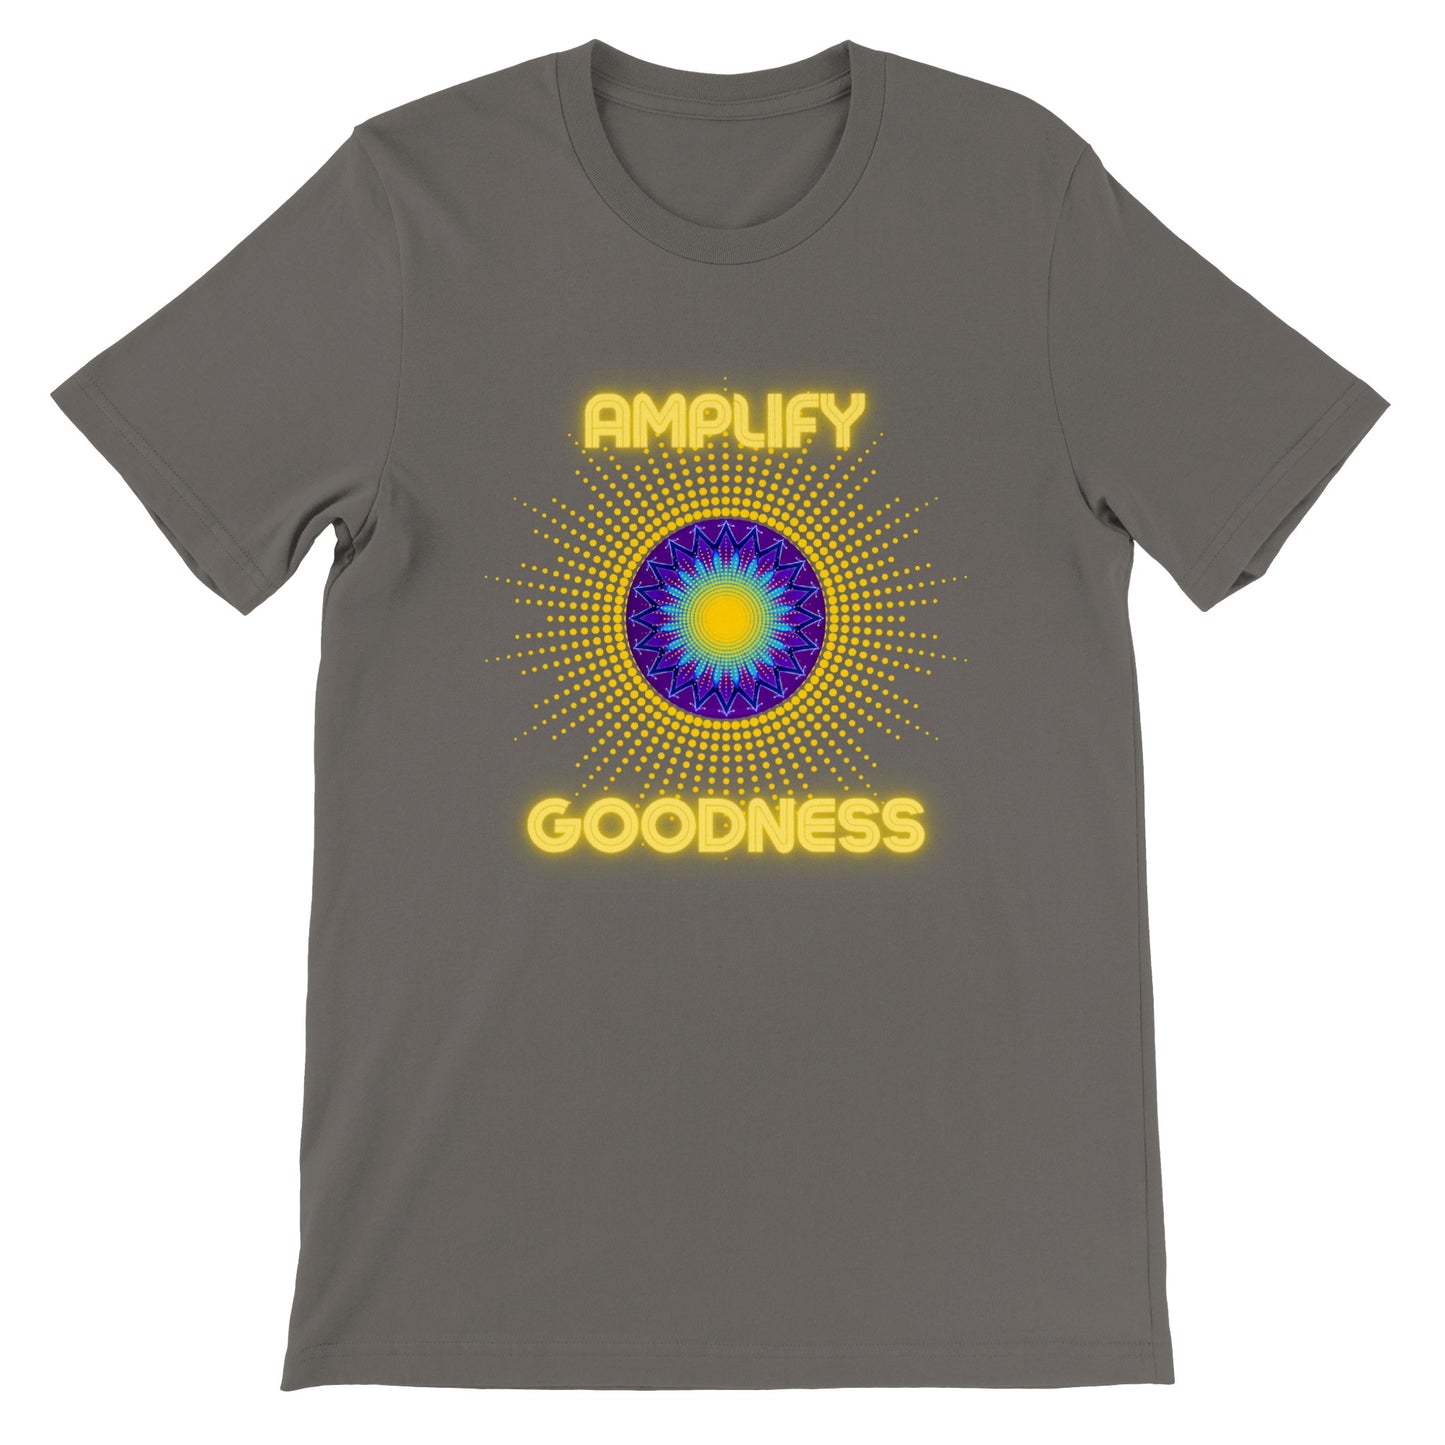 "Amplify Goodness" Tee